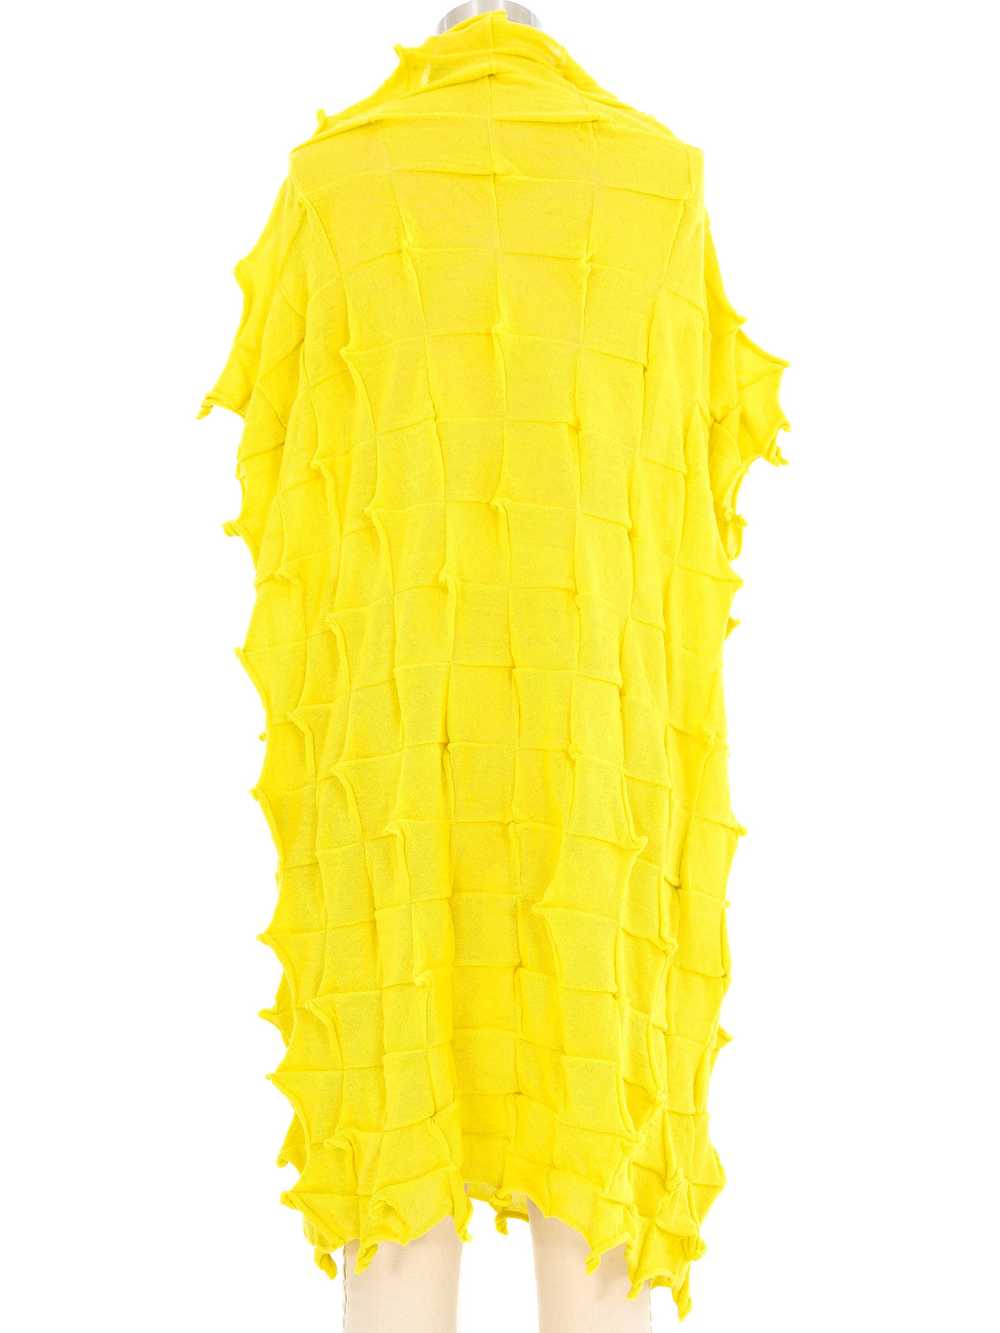 Issey Miyake Neon Textured Knit Dress - image 4